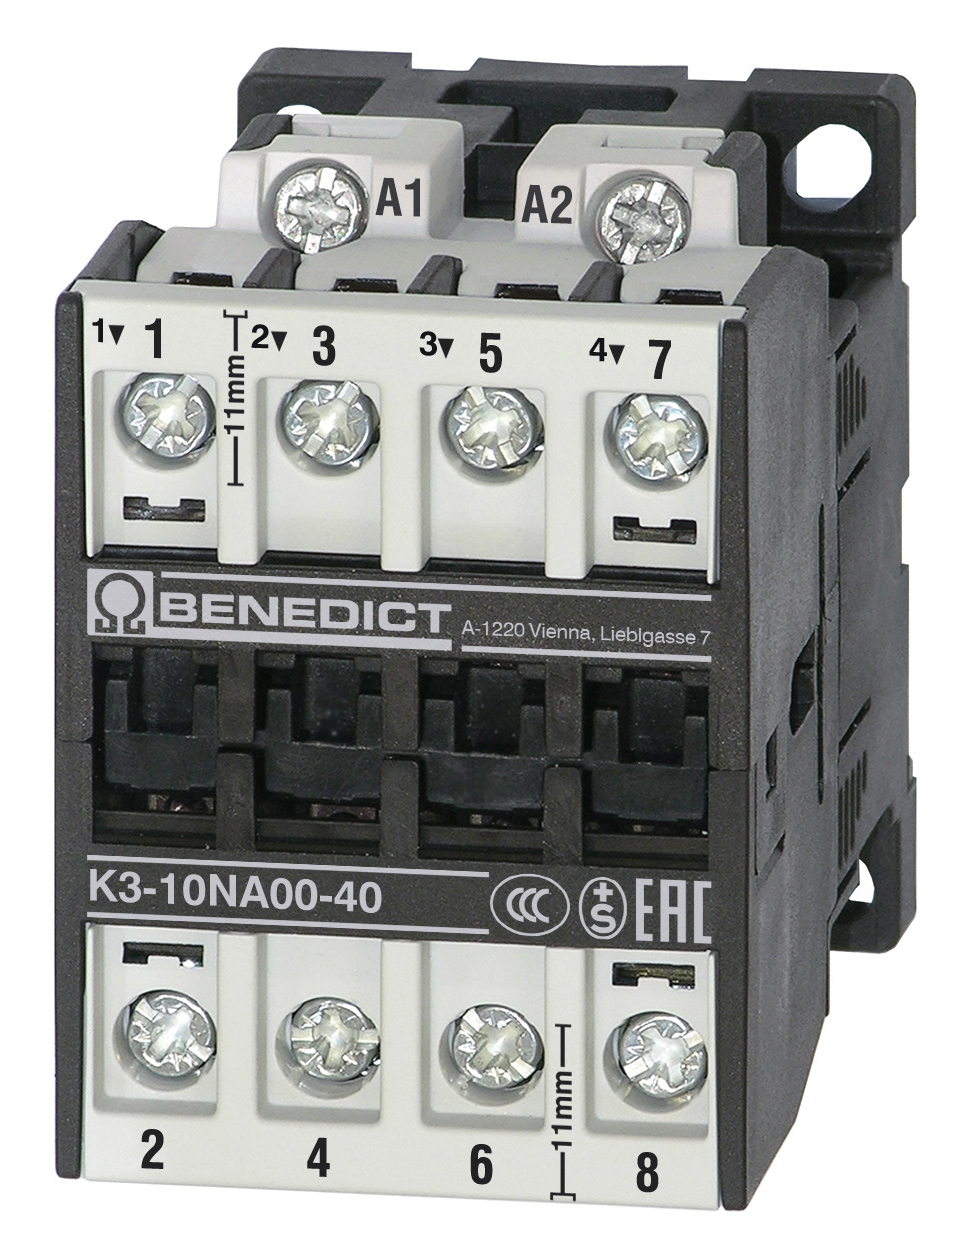  K3-10NA00-40 24 BENEDICT